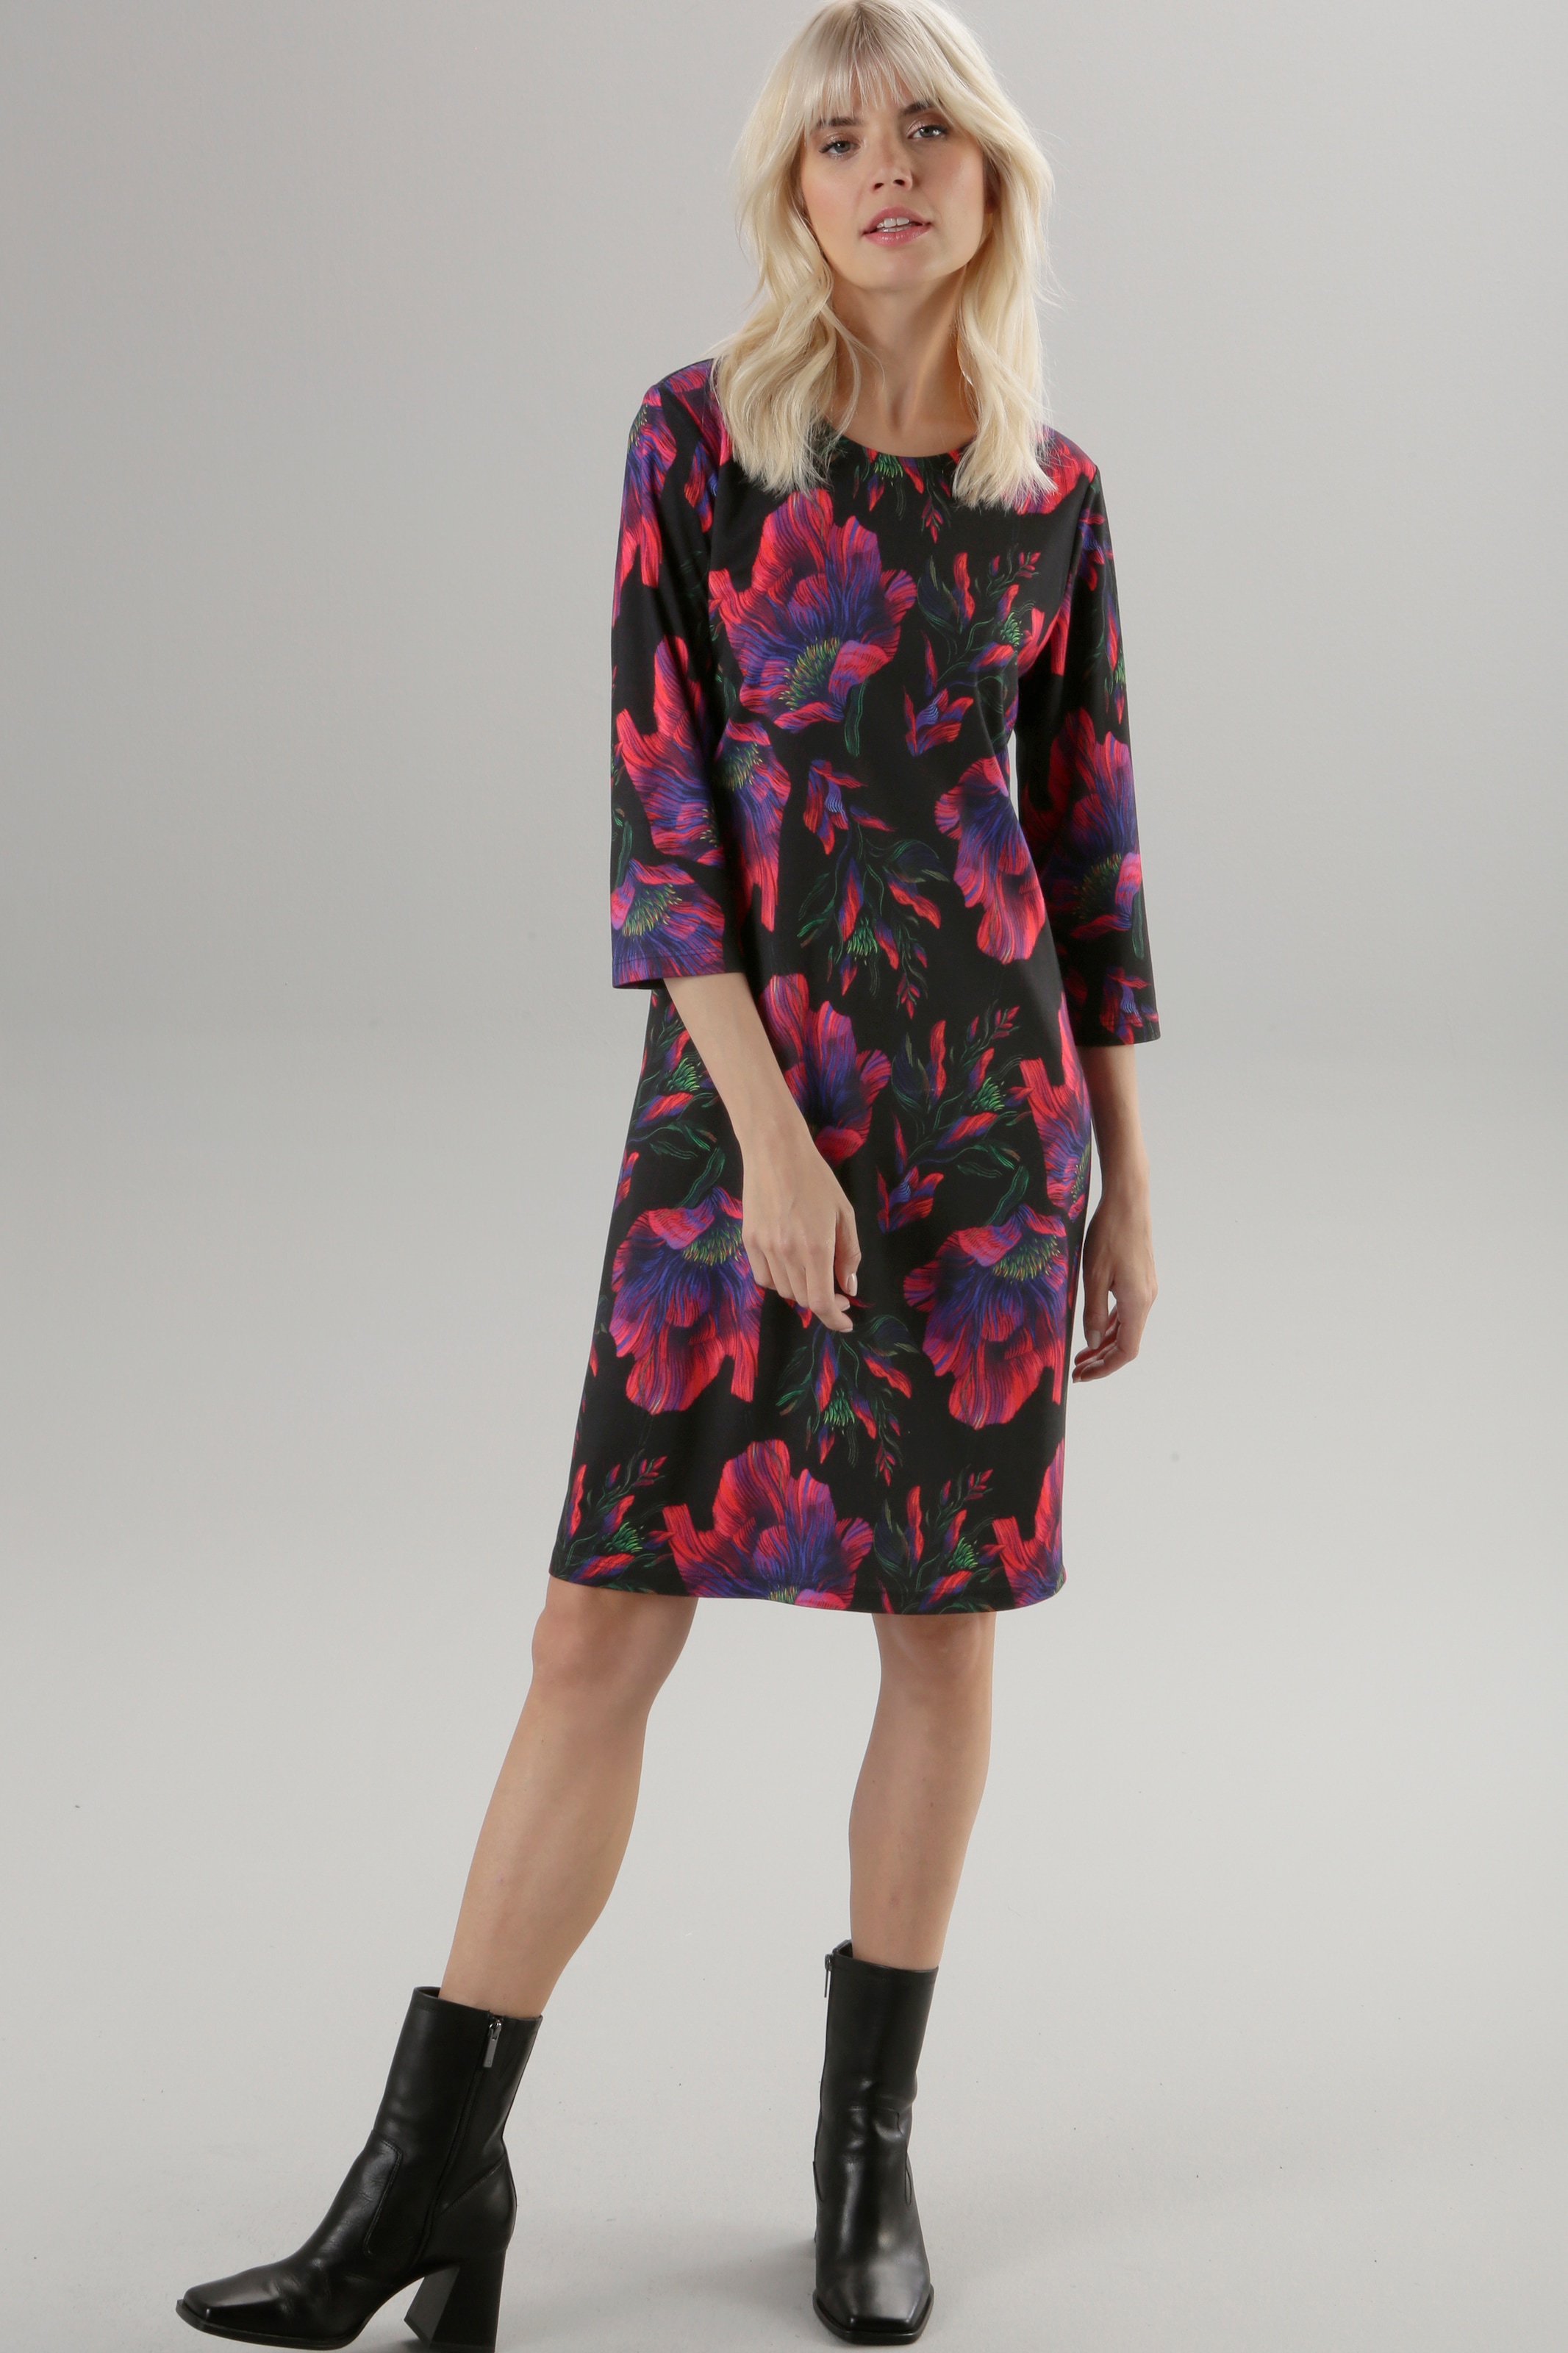 Blumendruck mit Knallfarben in SELECTED Jerseykleid, Aniston kaufen